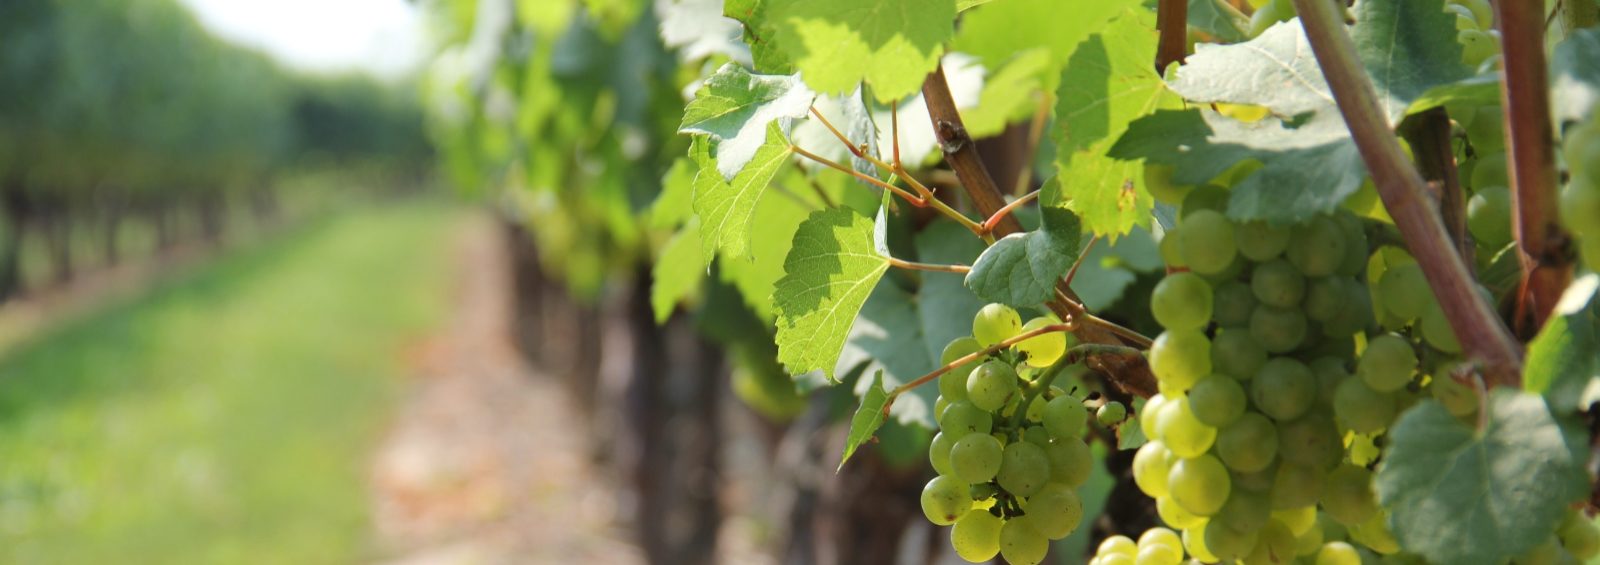 Santa Maria Valley California wine tasting, vineyards